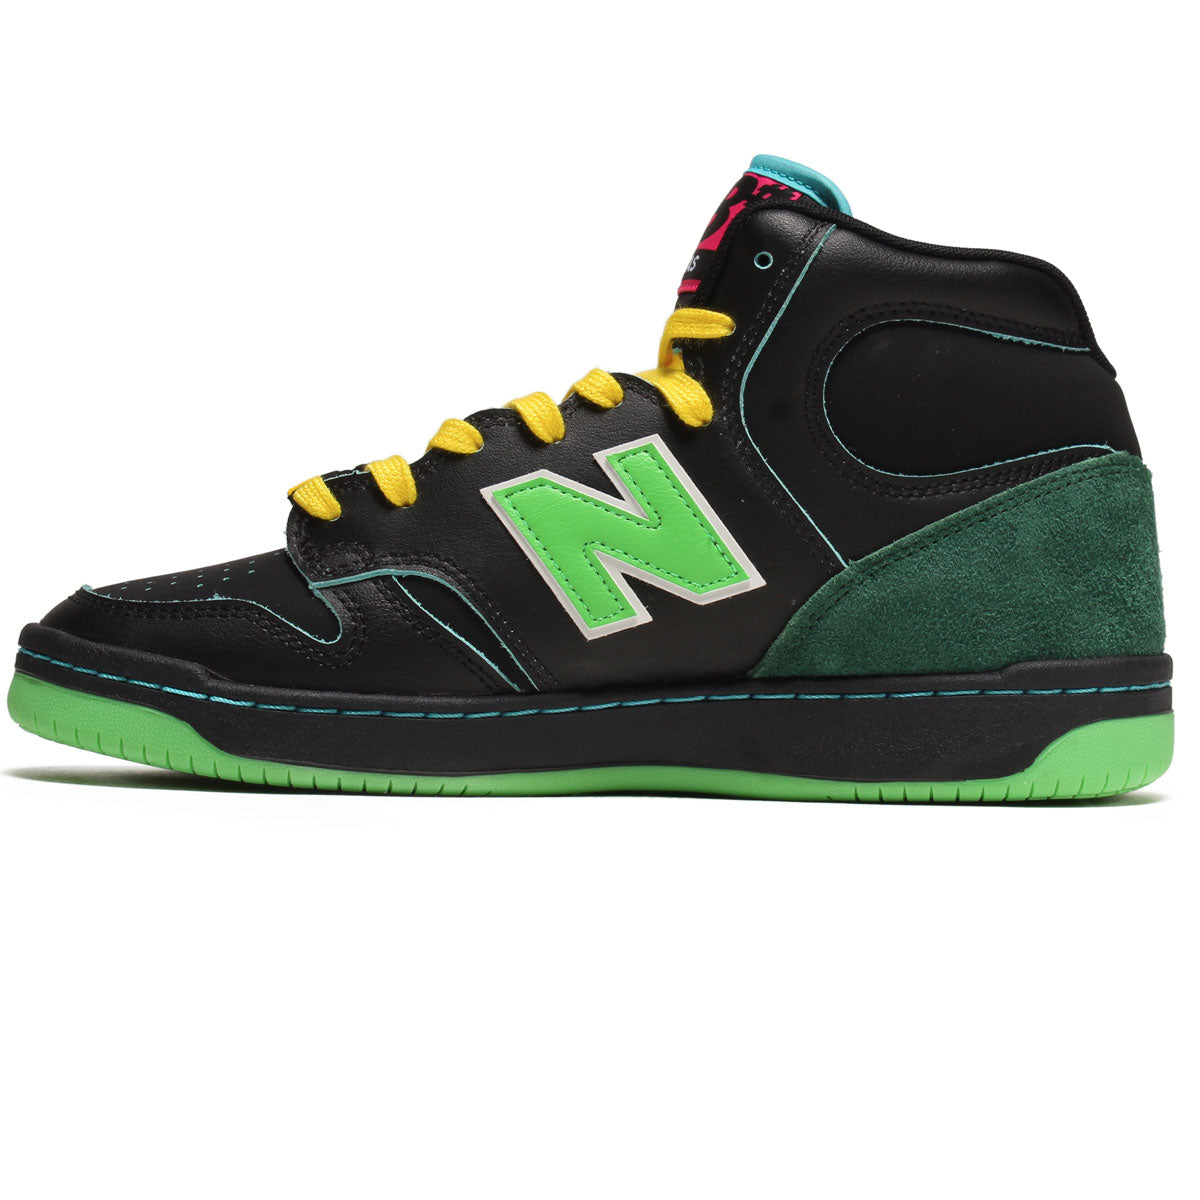 New Balance x Natas 480 High Shoes - Black/Green/Pink image 2